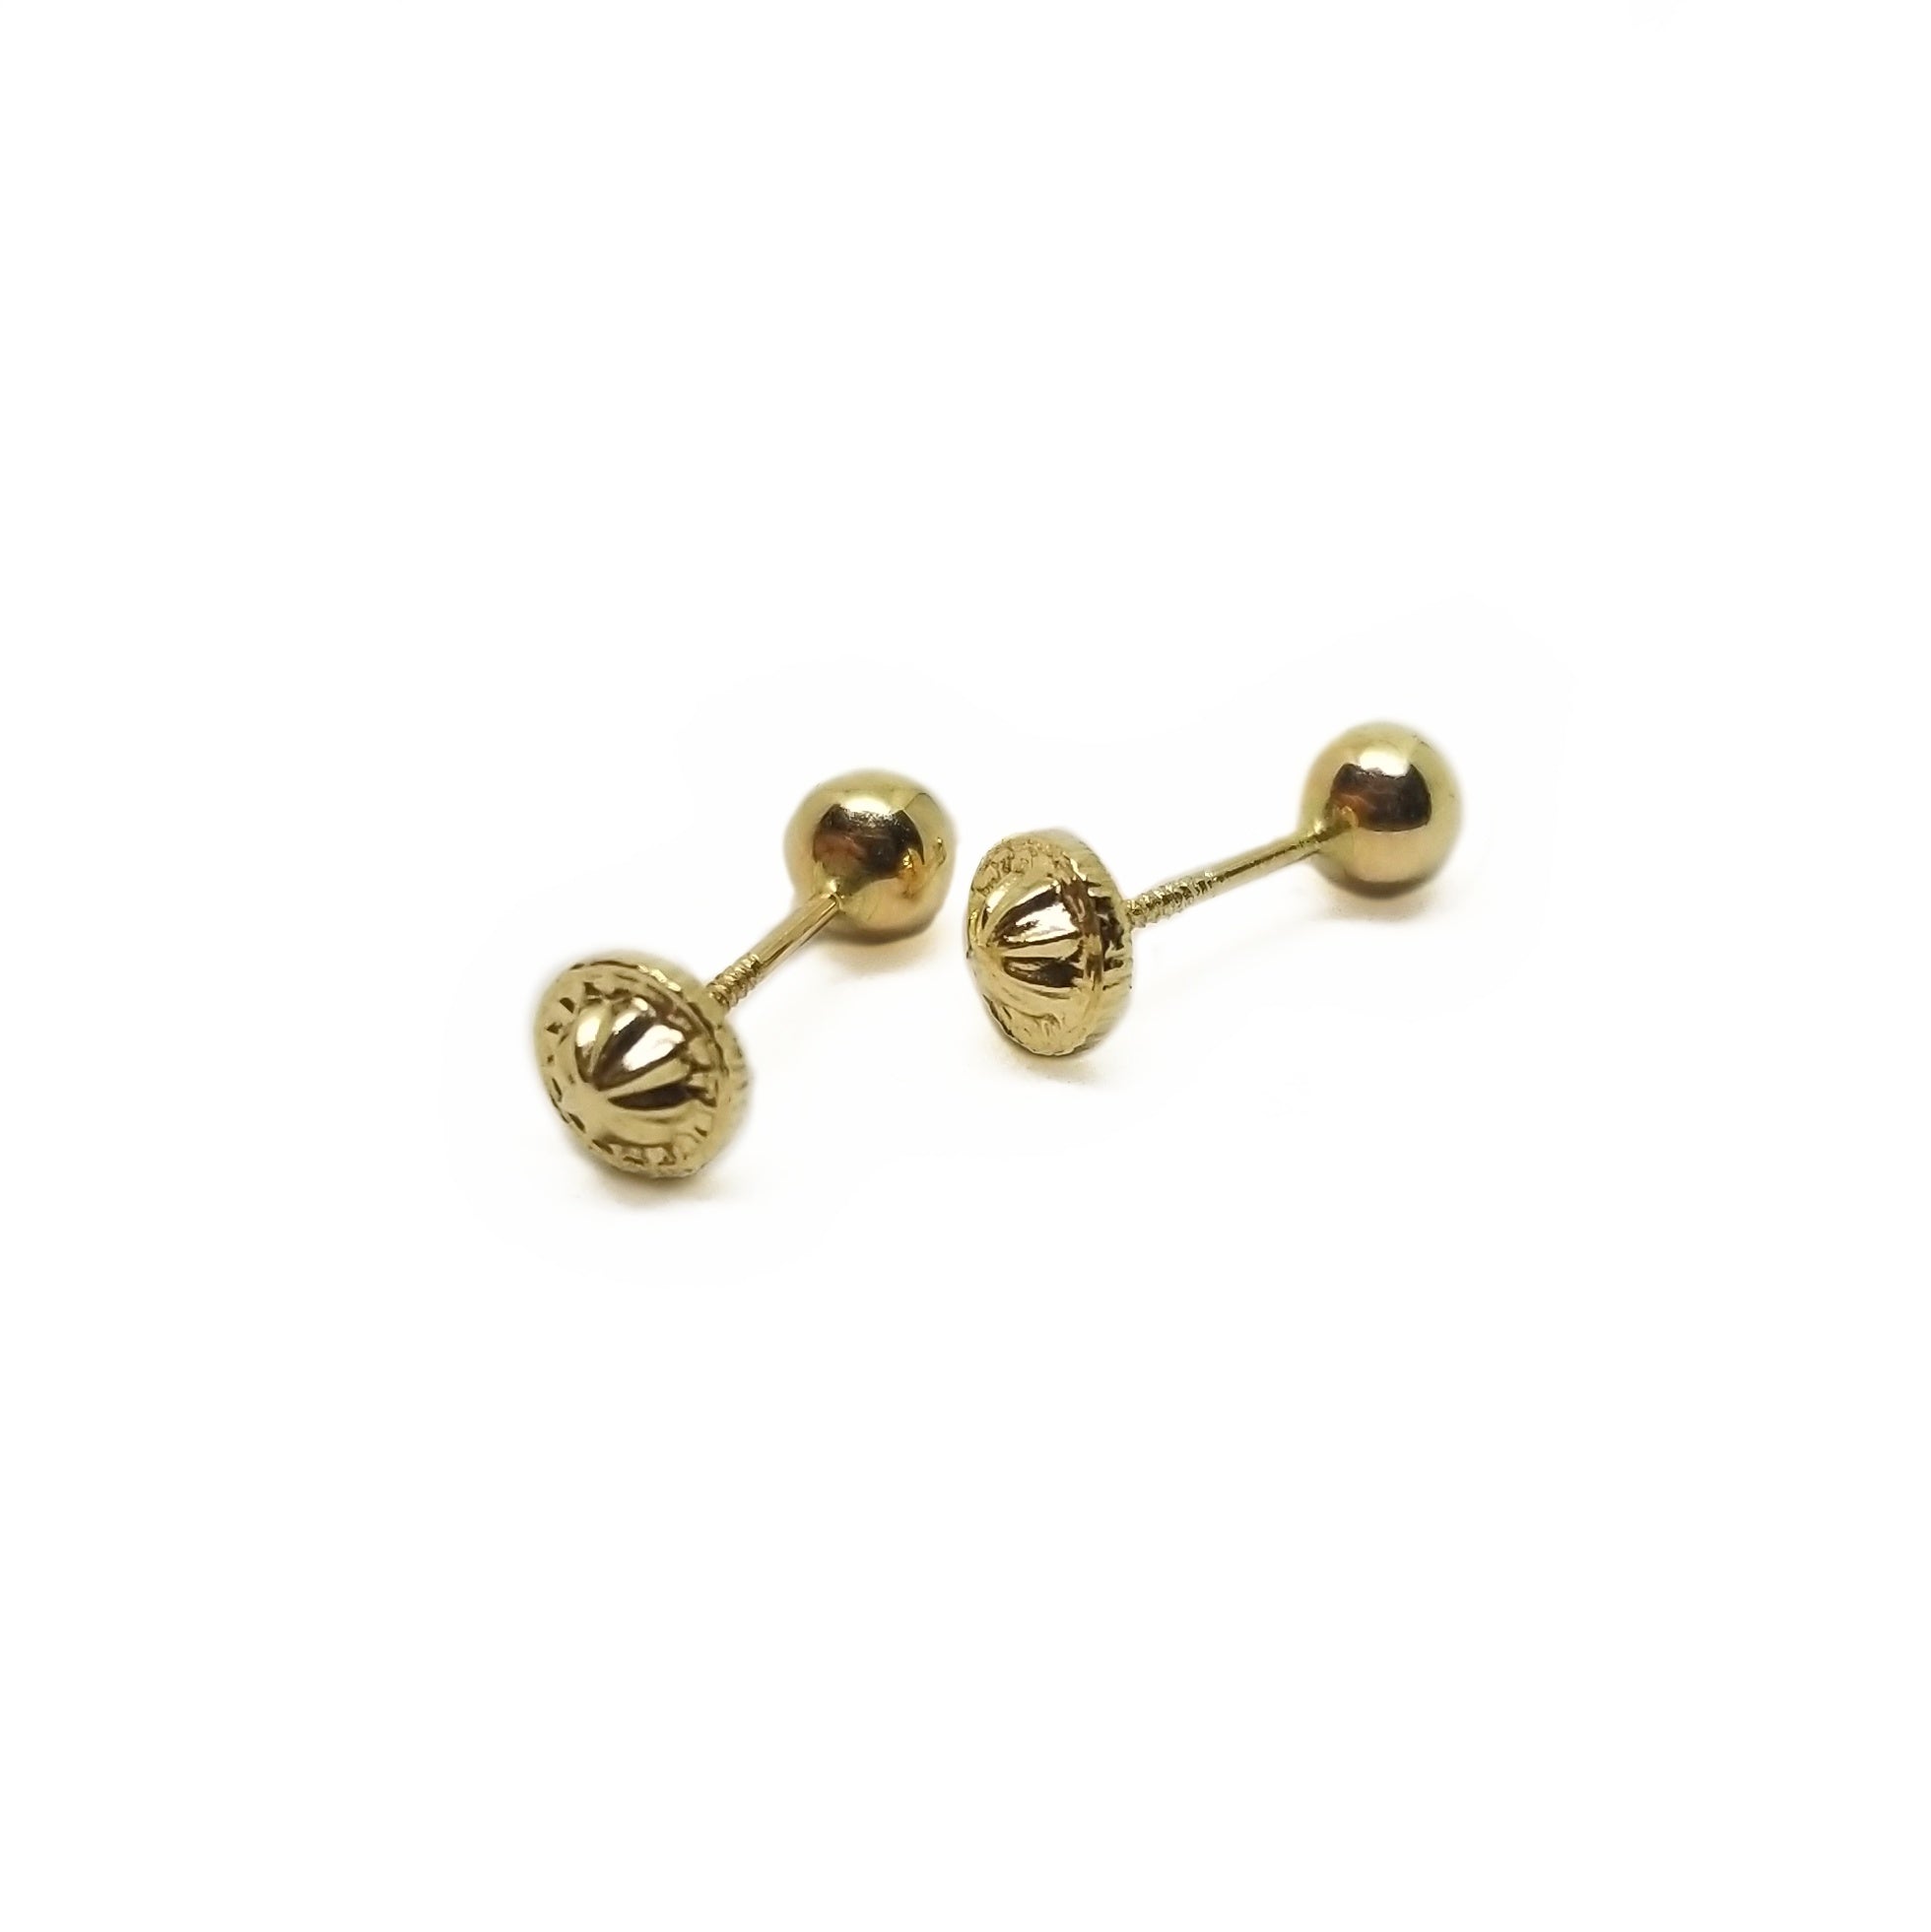 Ball baby earrings studs in yellow 14k gold